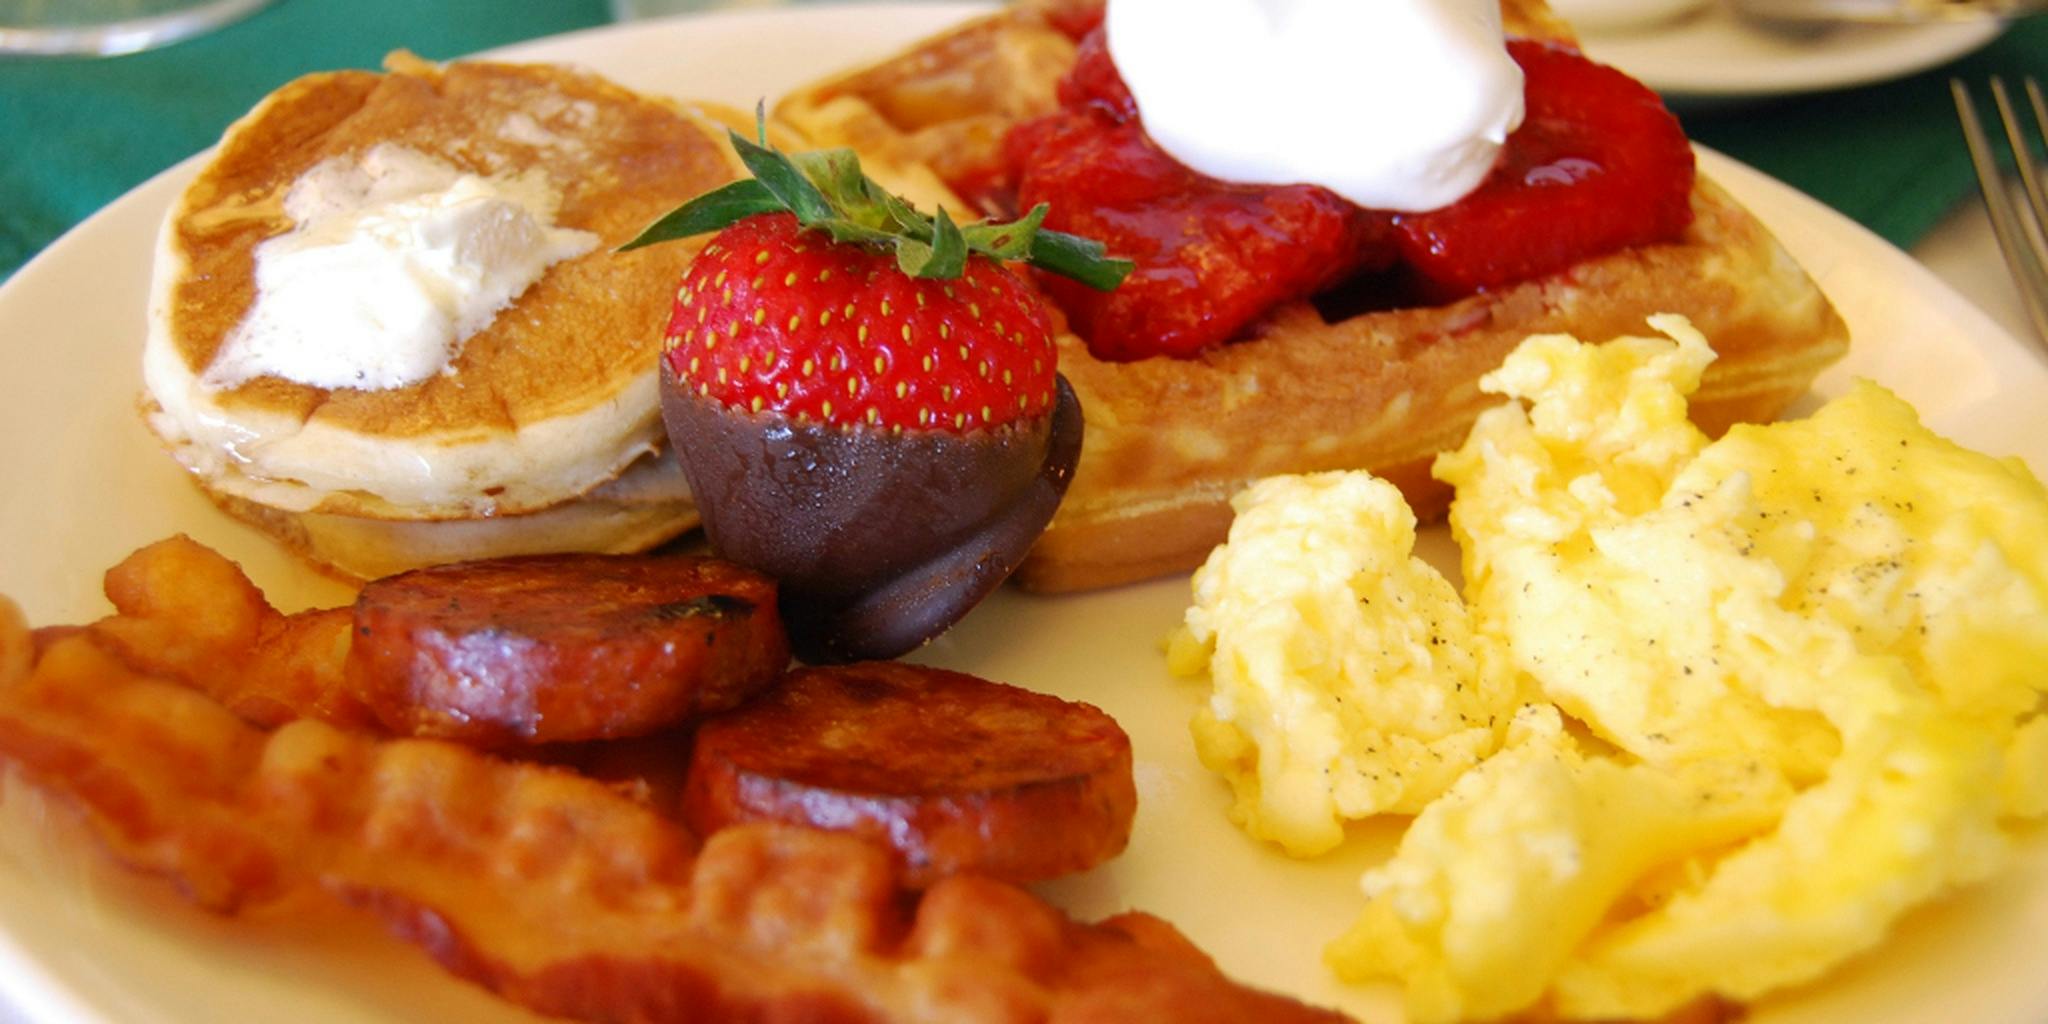 We breakfasted. Завтрак. Воскресный завтрак. Завтрак фото. Воскресный завтрак для семьи.